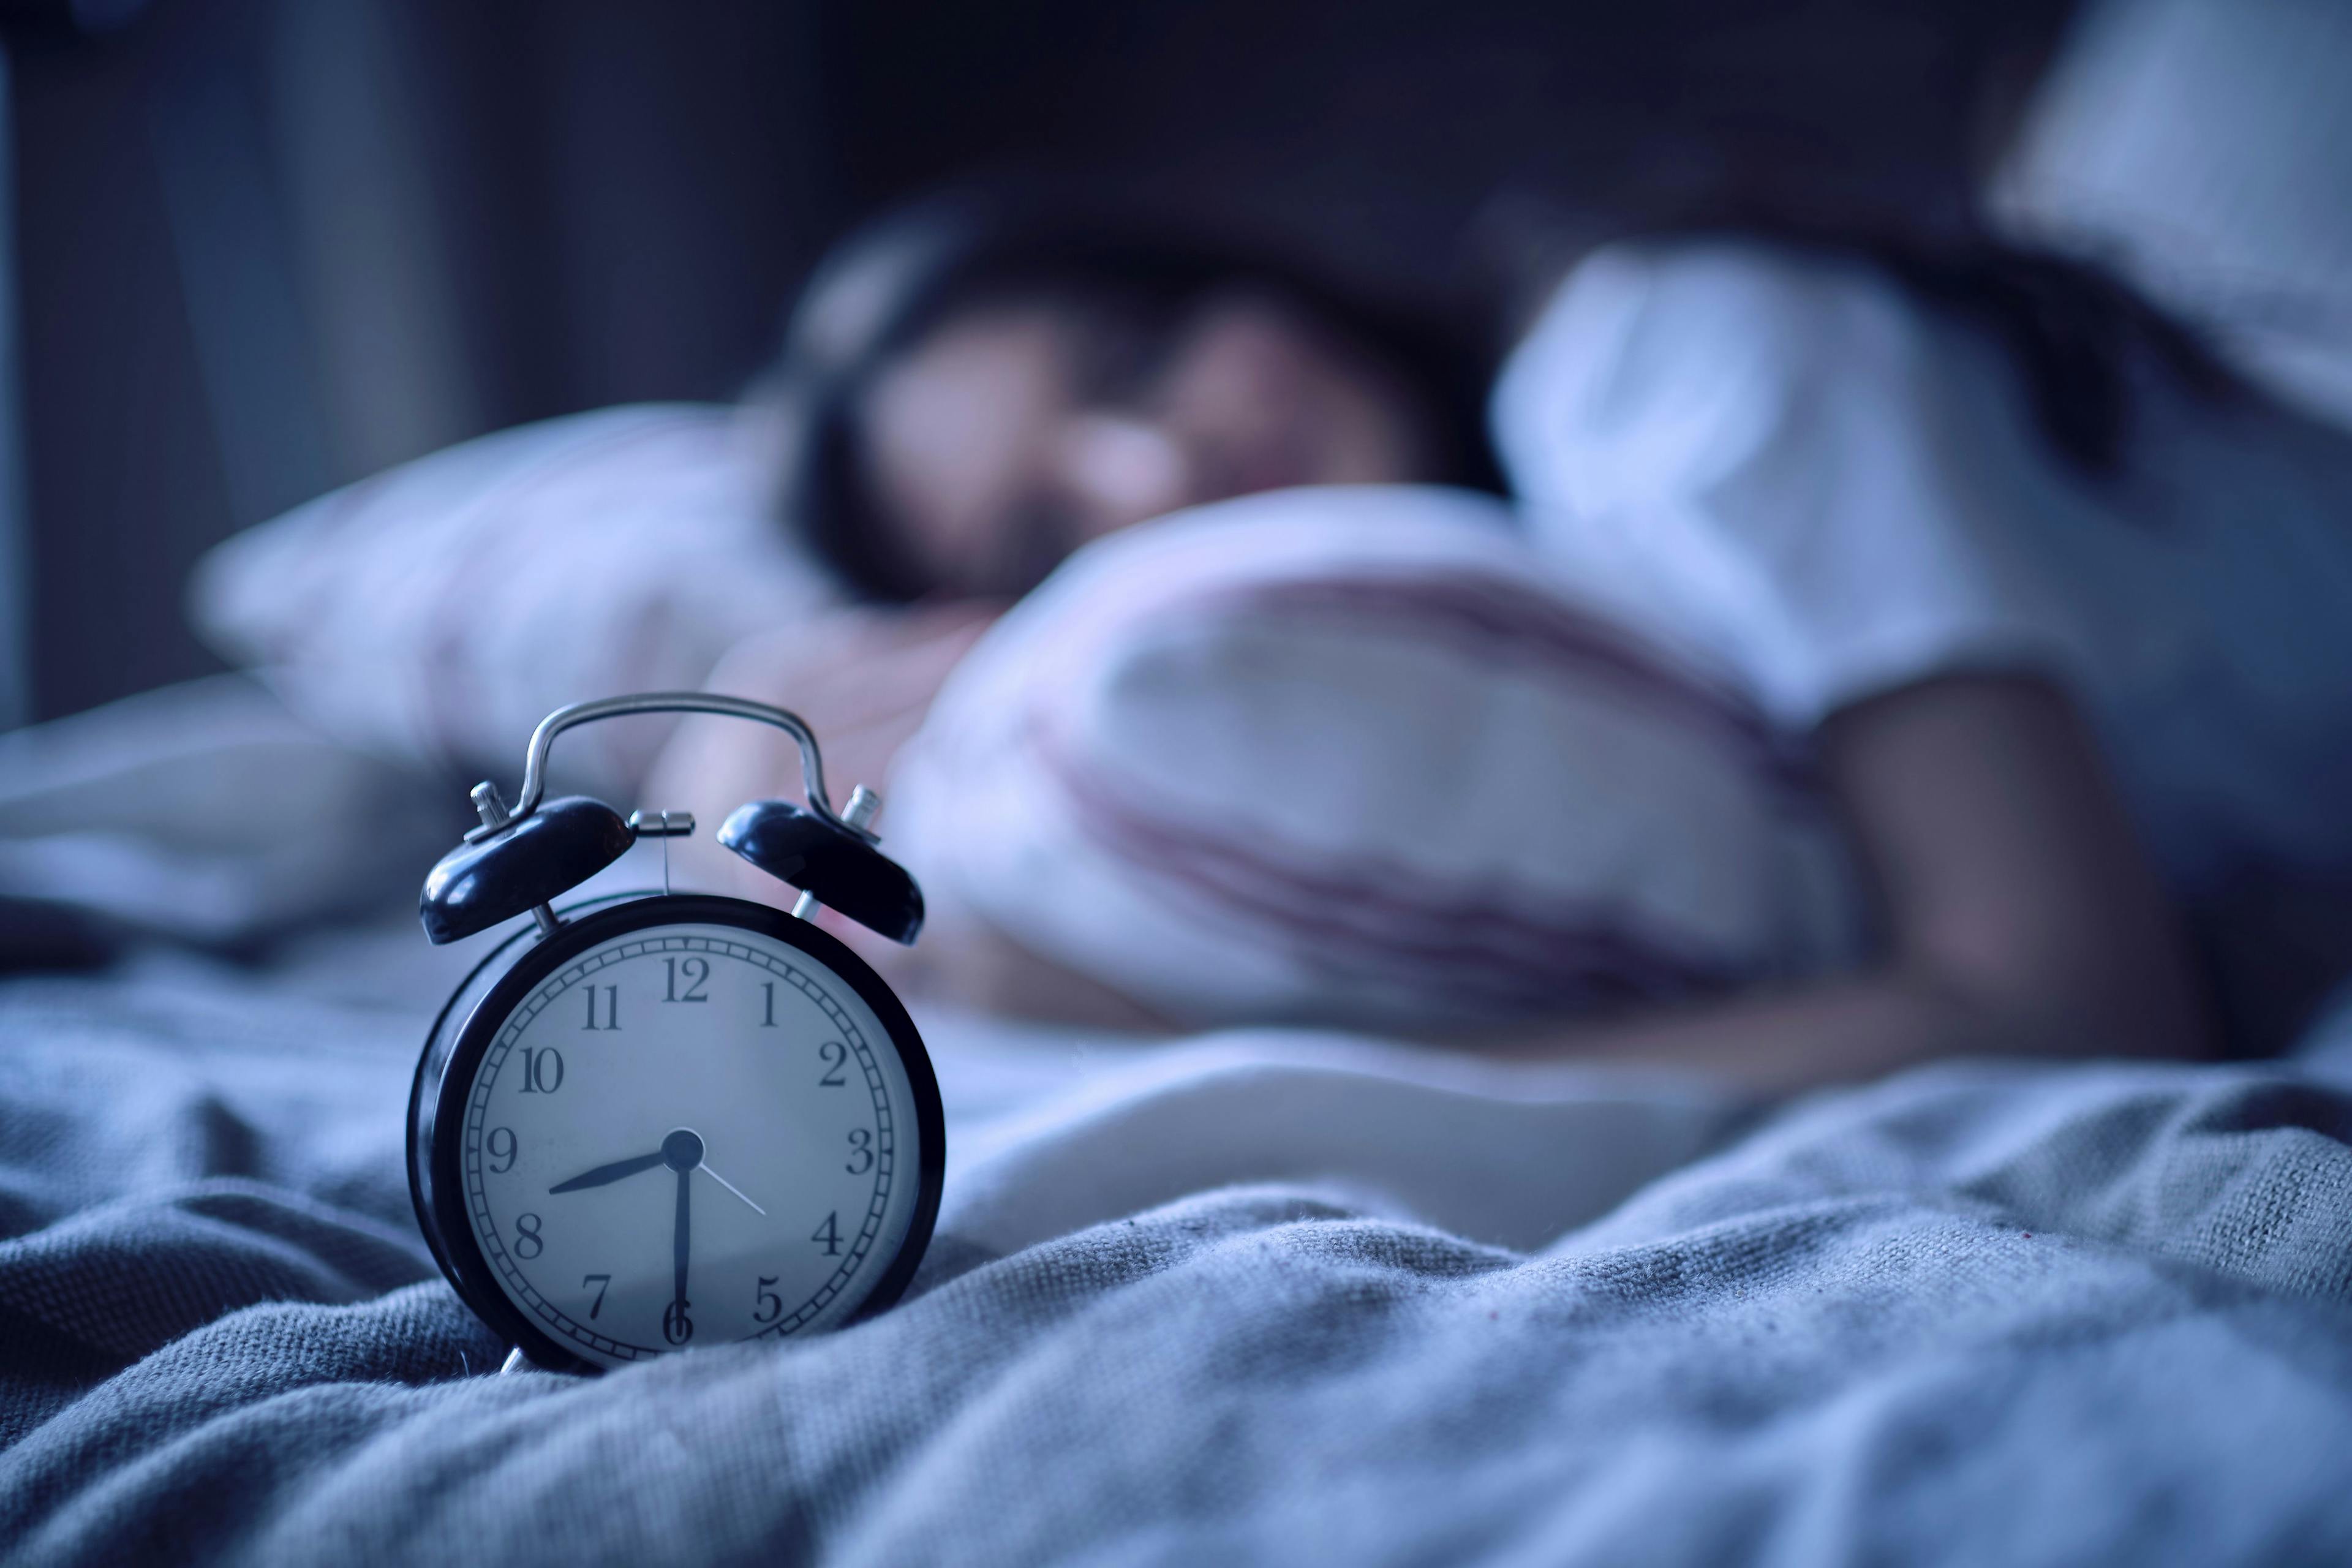 Alarm Clock Sitting Next to Dreaming Individual | image credit: yavdat - stock.adobe.com